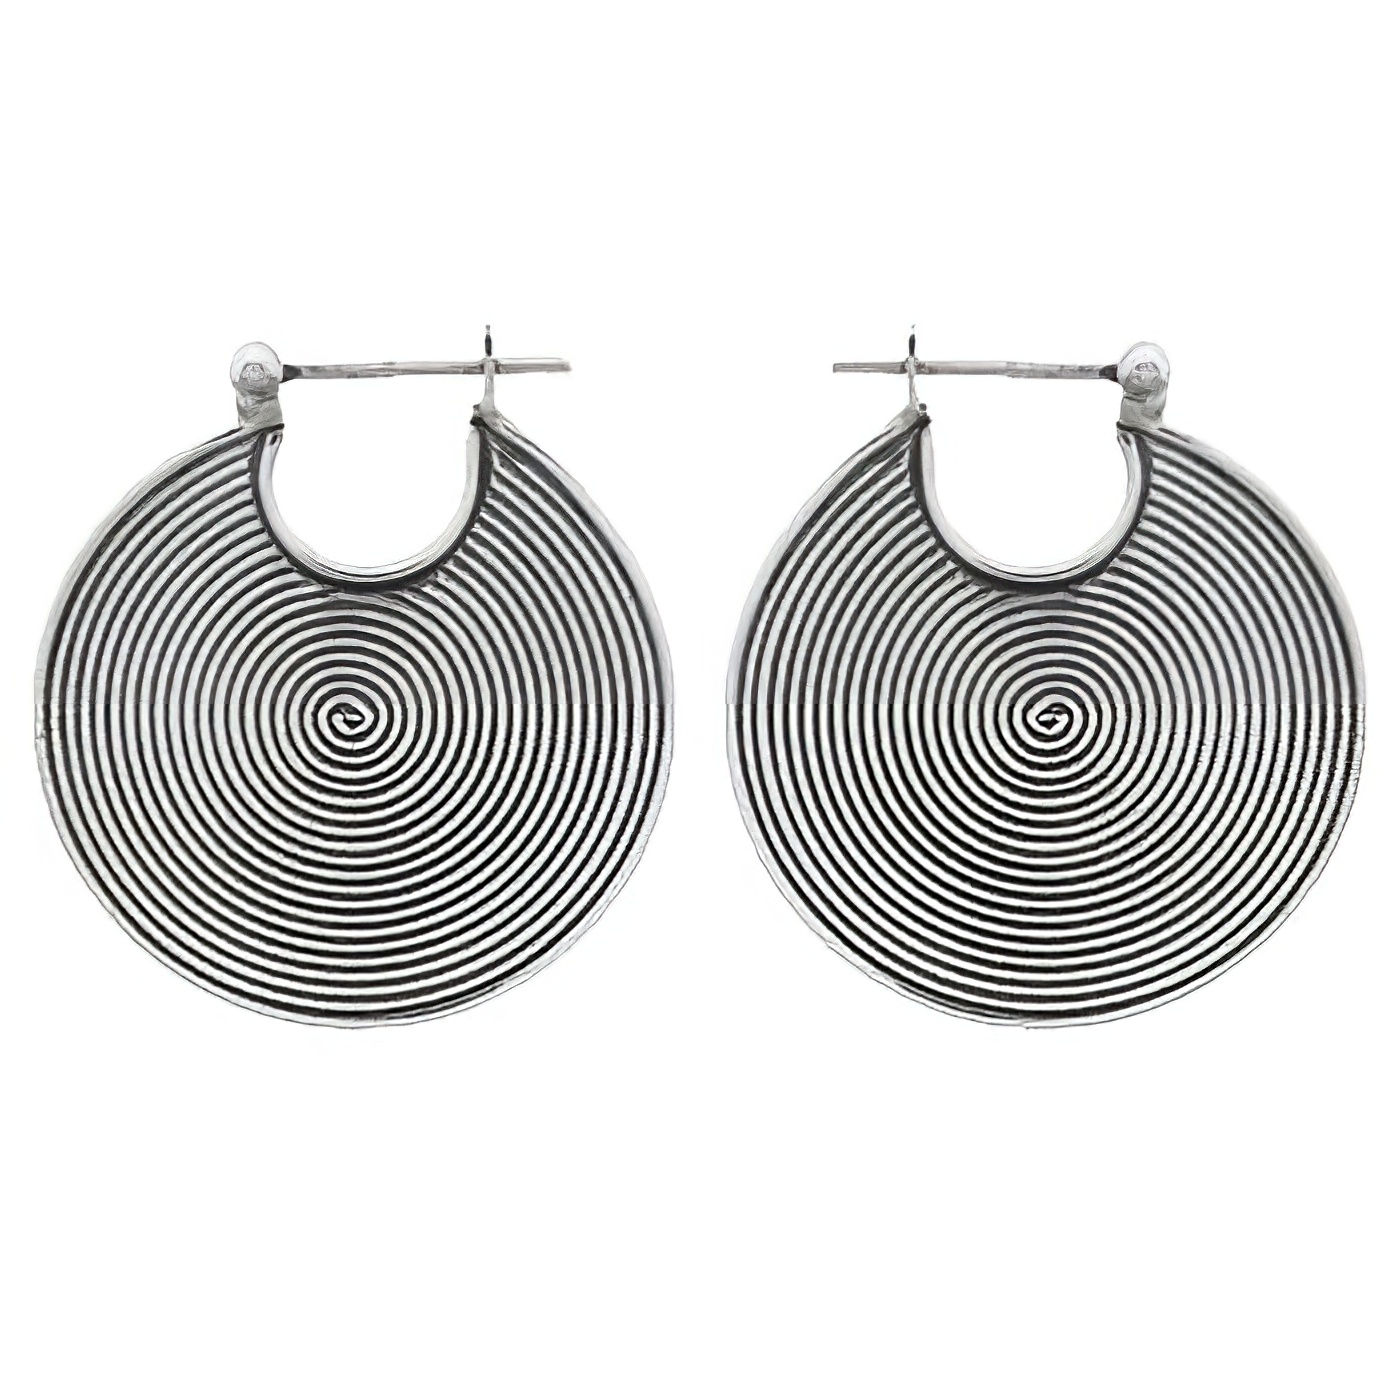 Spiral Hoops 26MM 925 Silver Earrings by BeYindi 